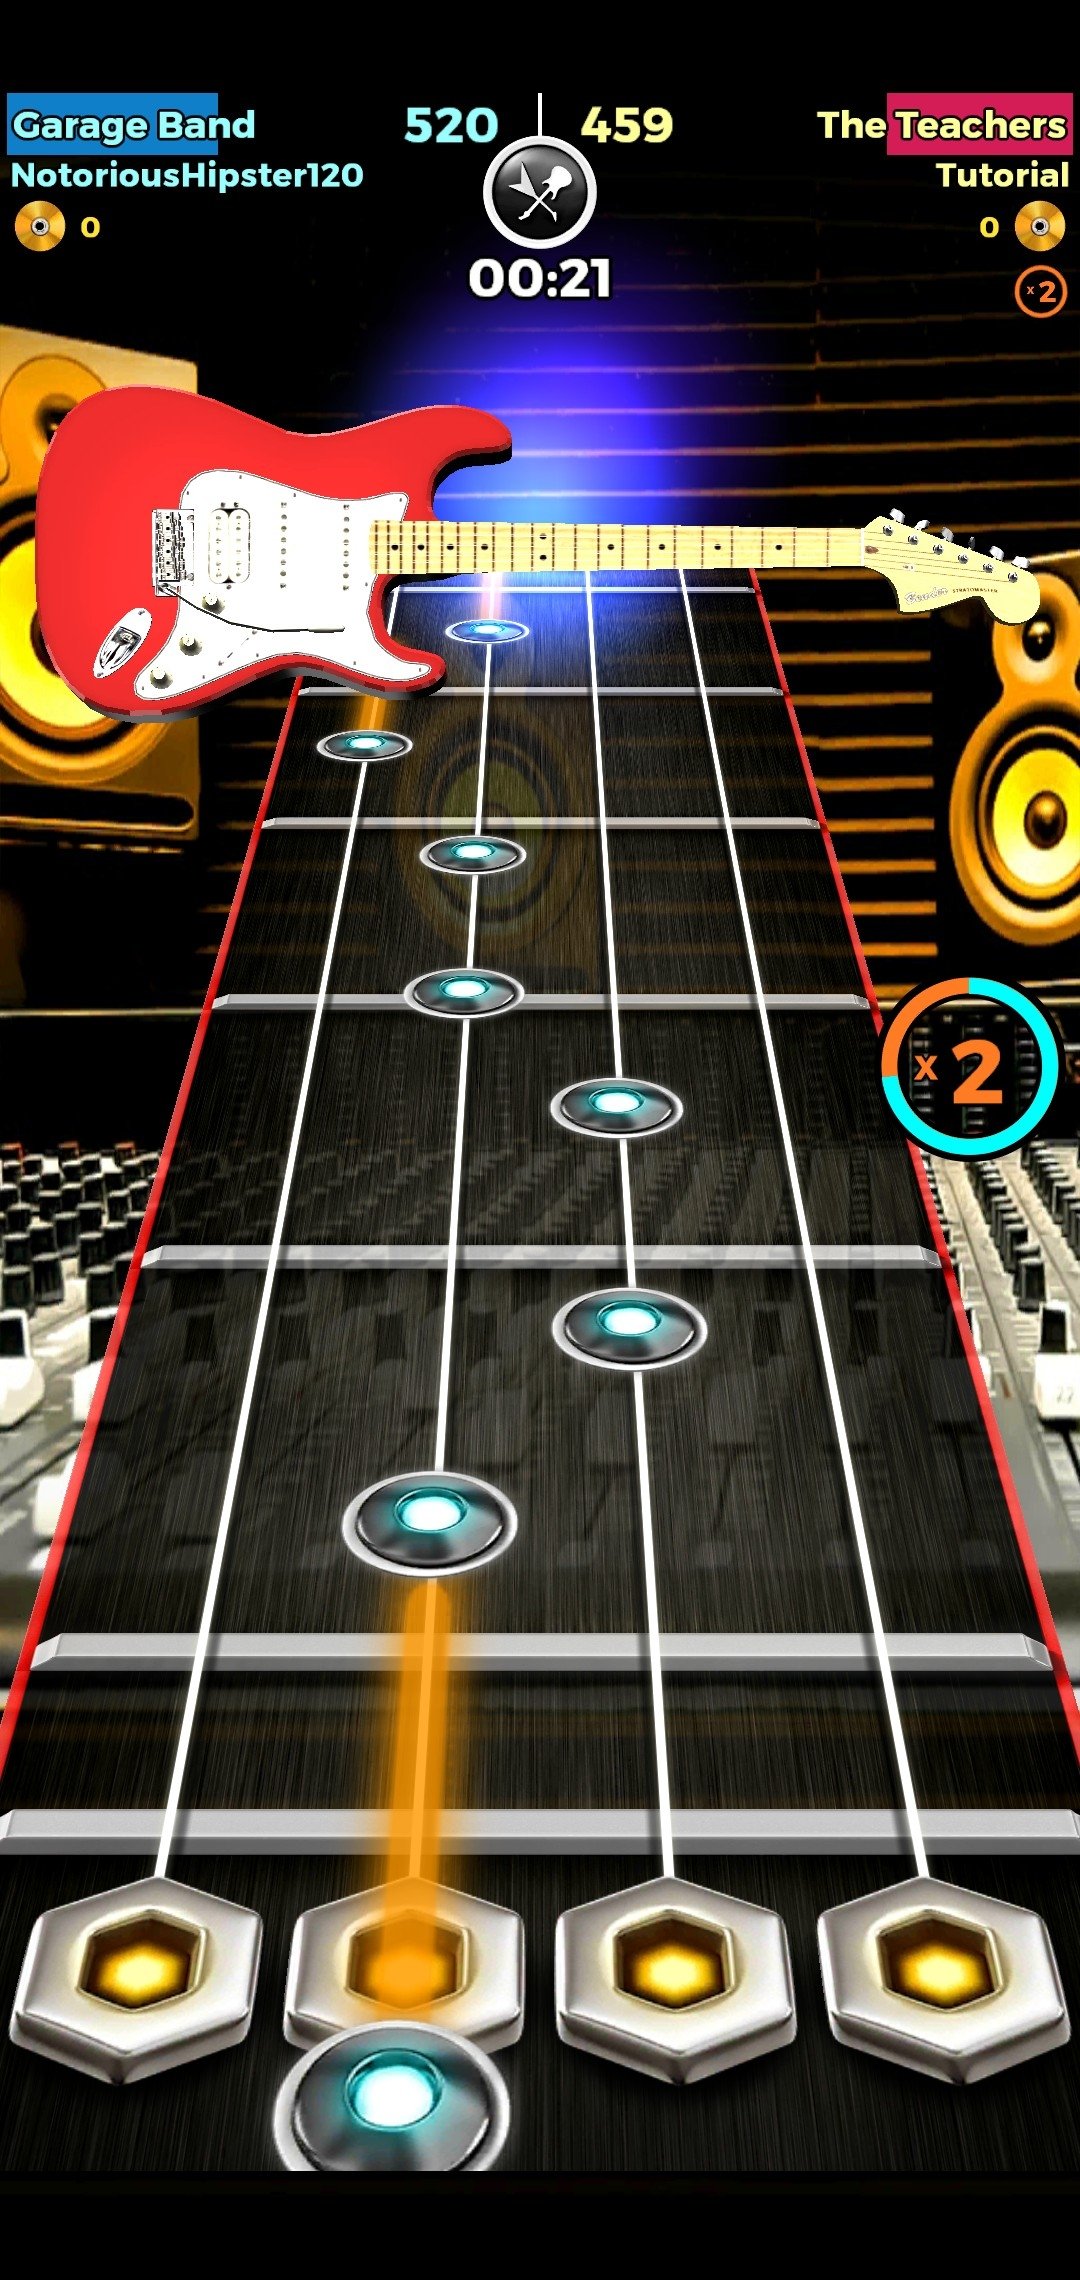 Guitar Band Battle 1 7 2 Android用ダウンロードapk無料